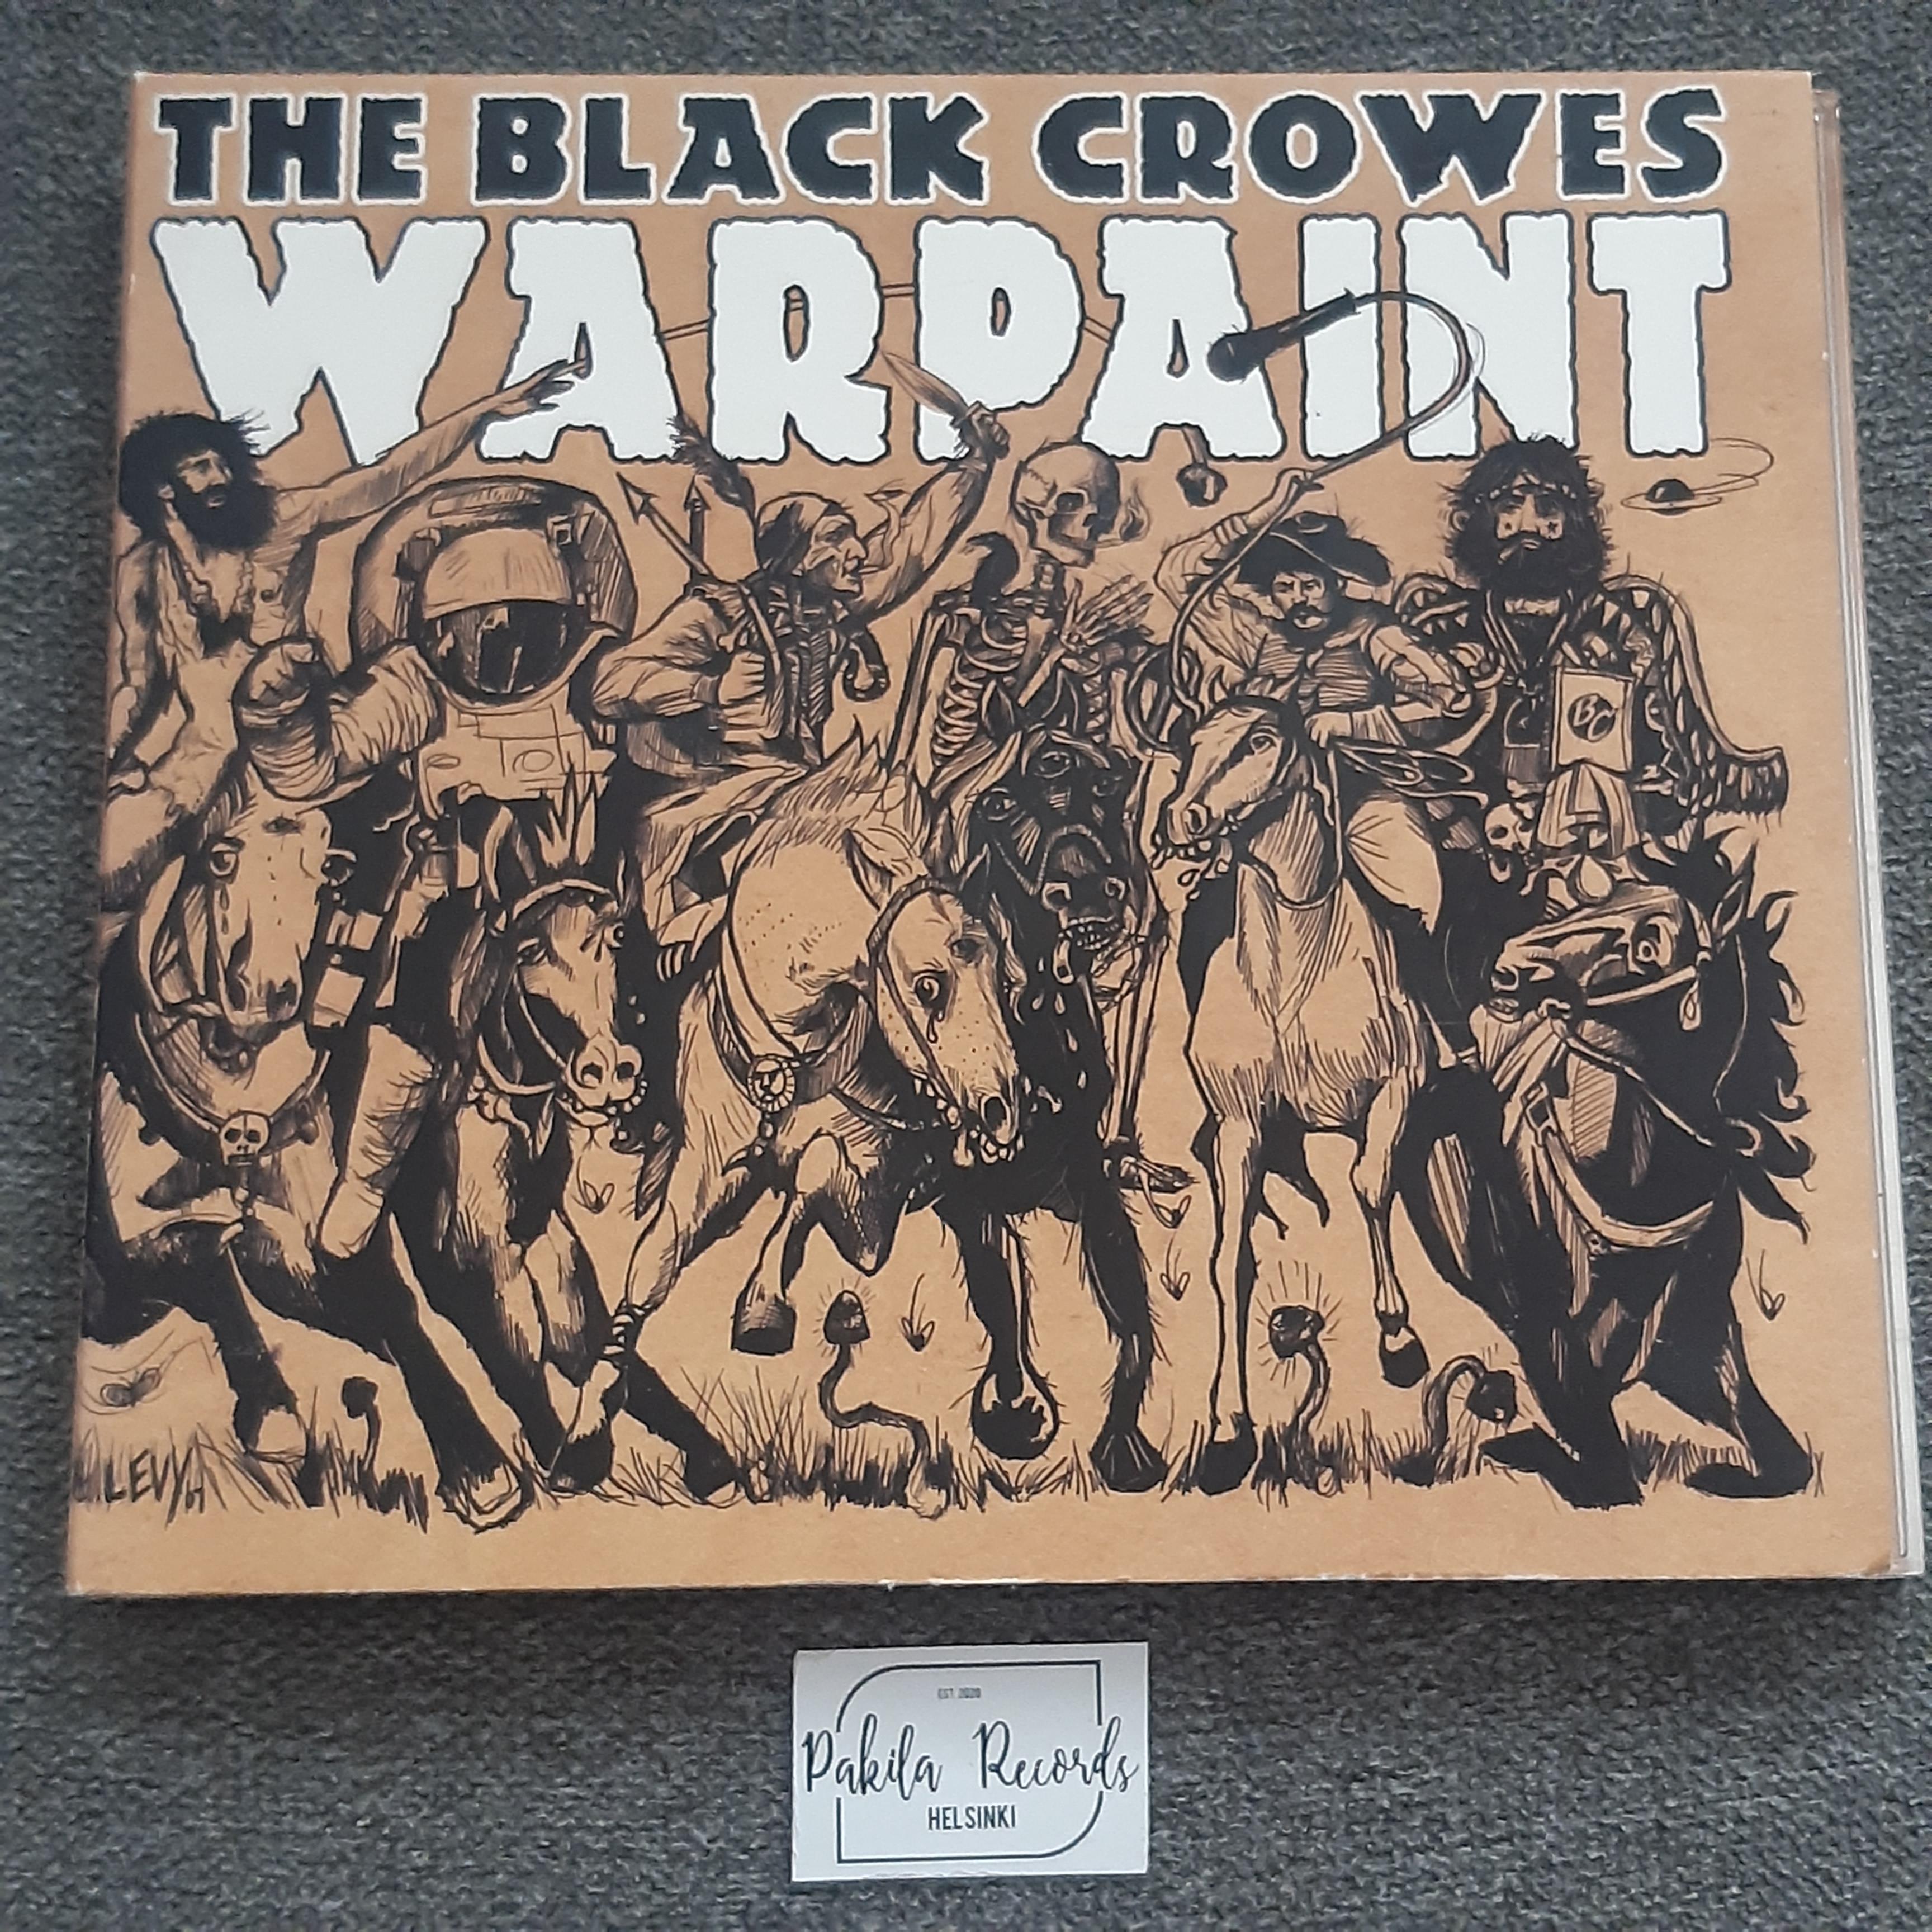 The Black Crowes - Warpaint - CD (käytetty)